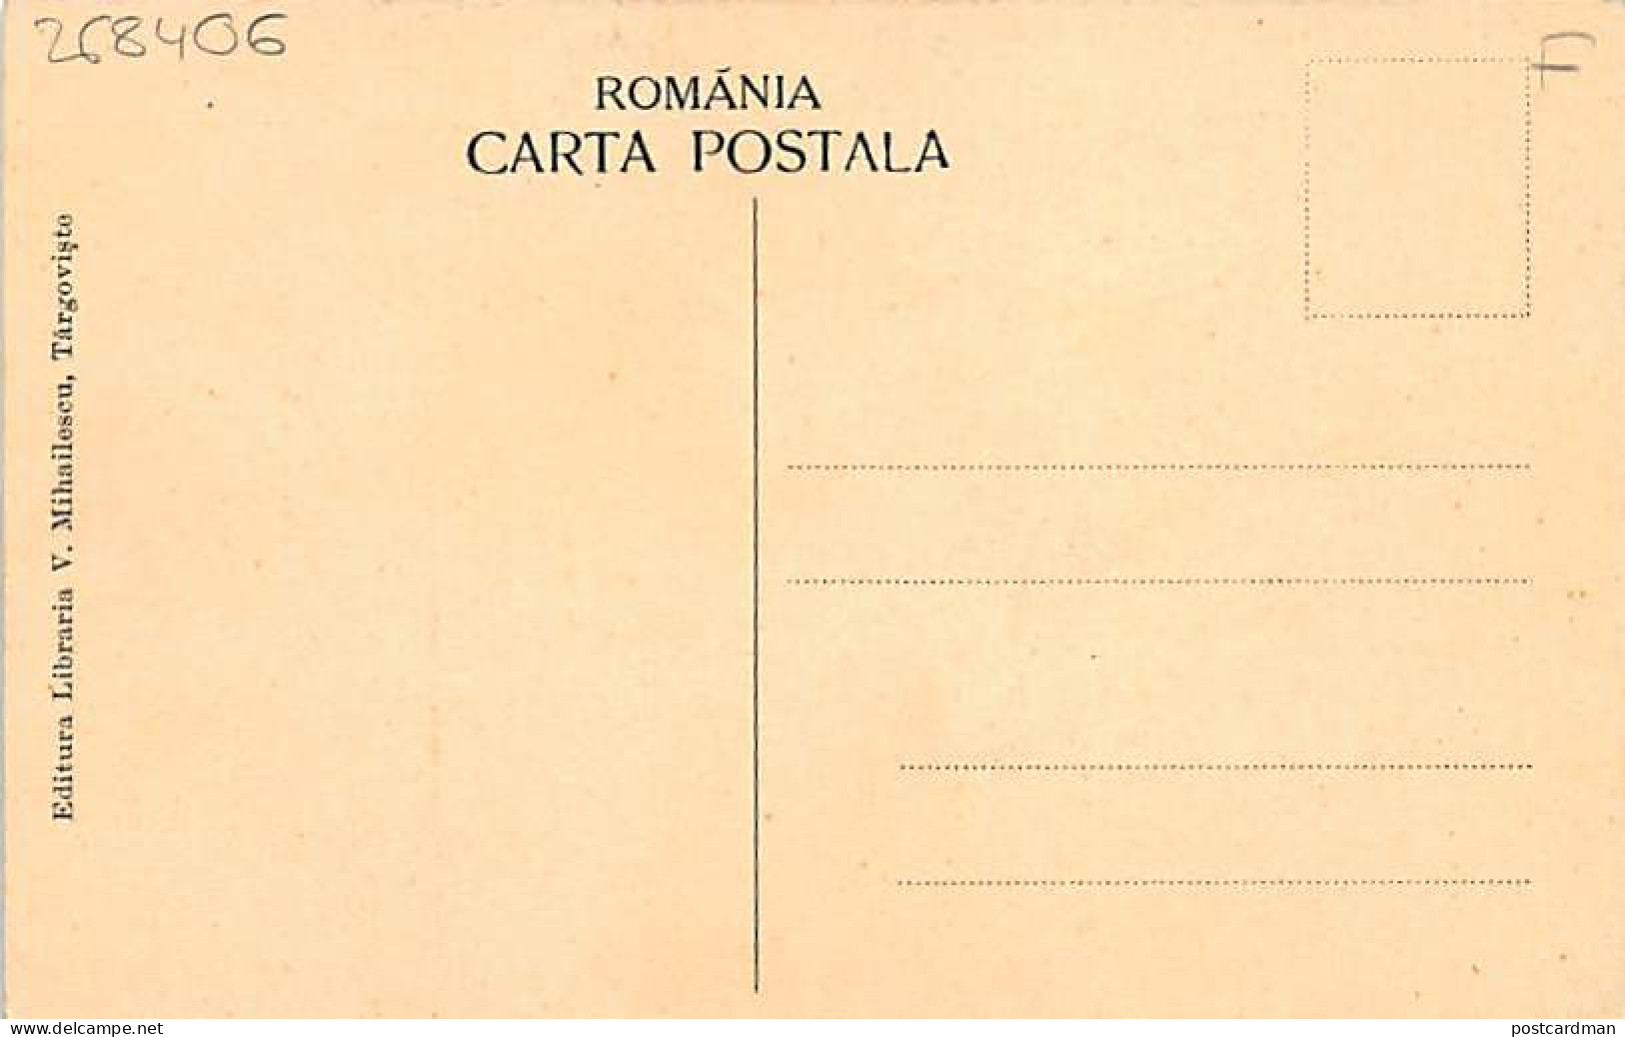 Romania - TARGOVISTE - Liceul Militar Manastirea Dealul - Roemenië